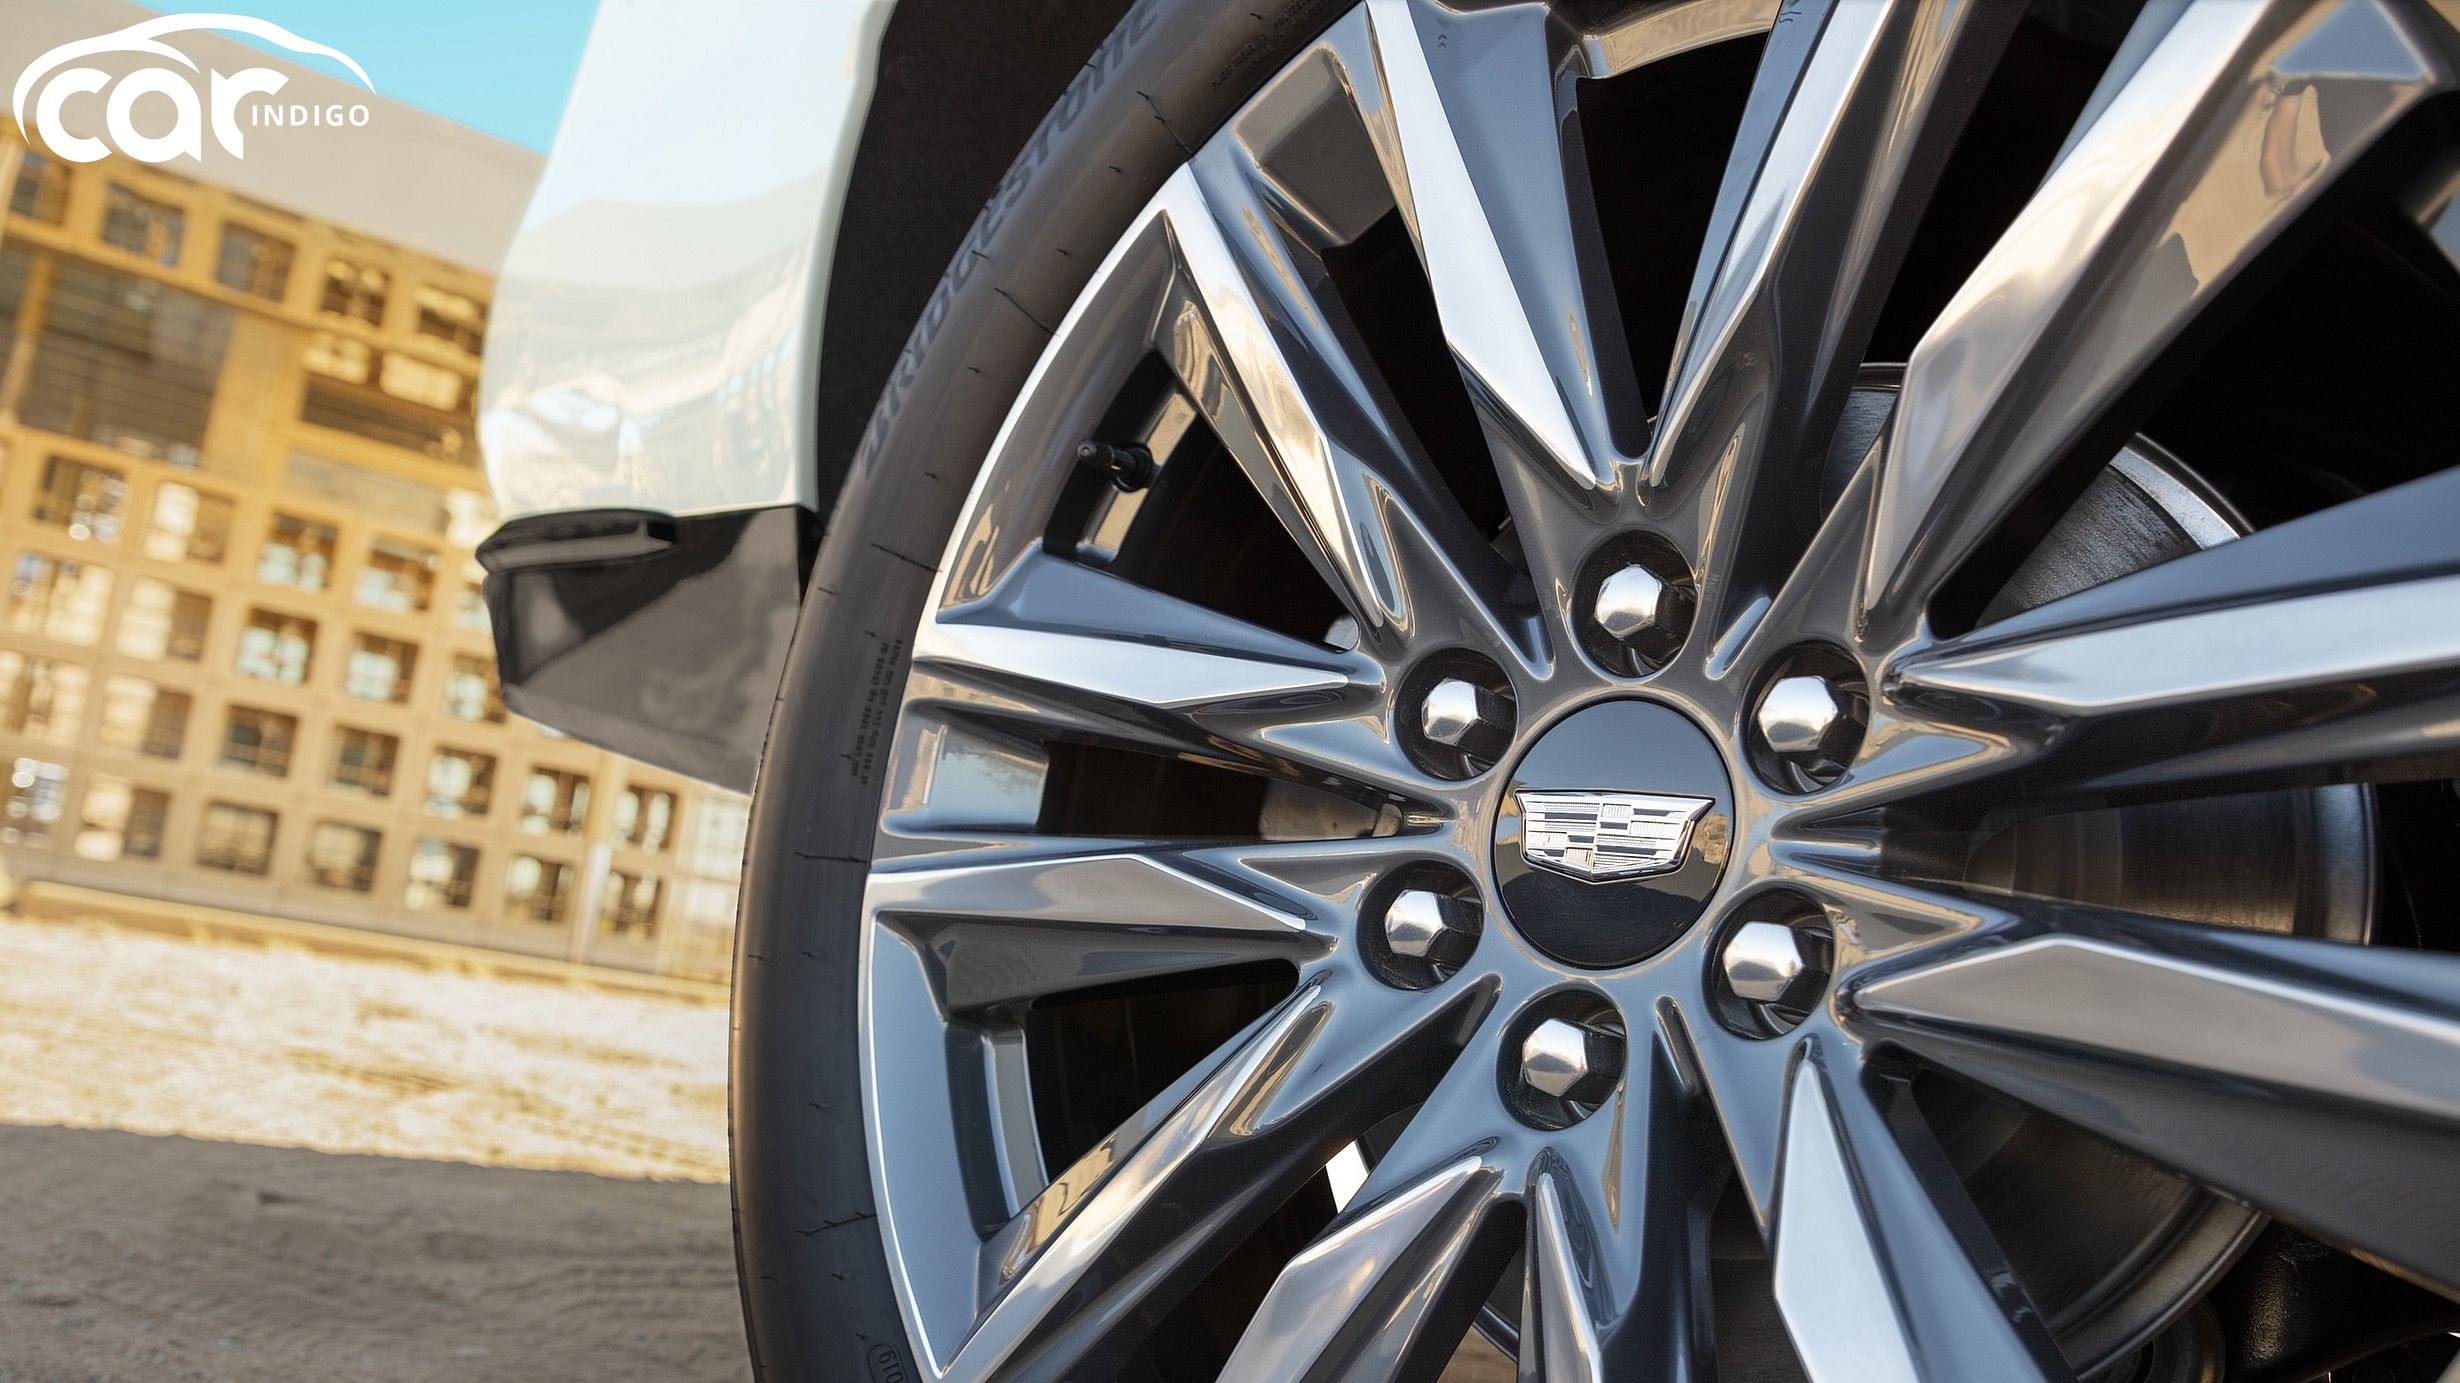 2021 Cadillac Escalade SUV wheel close-up view